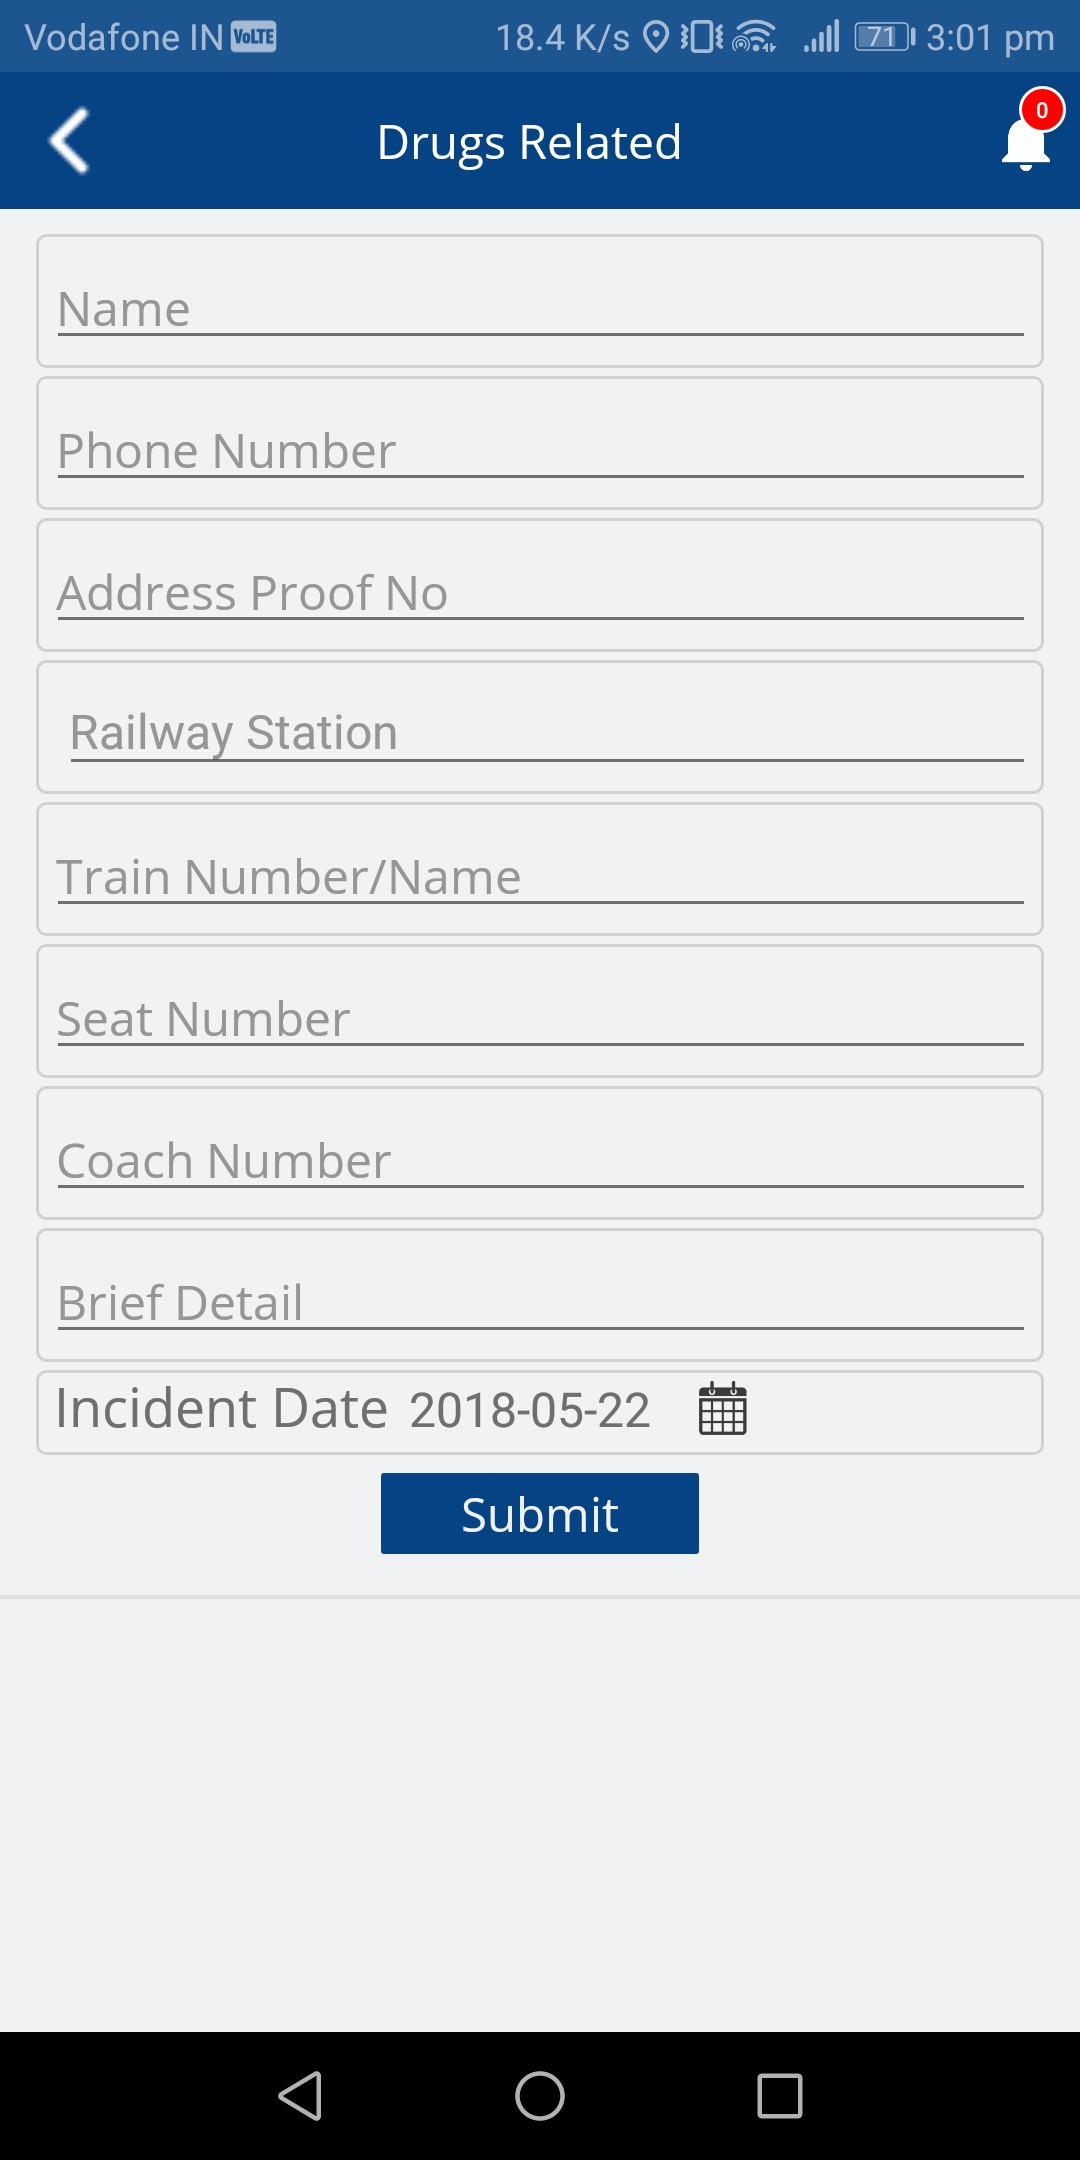 Gujarat Railway Police Form App.